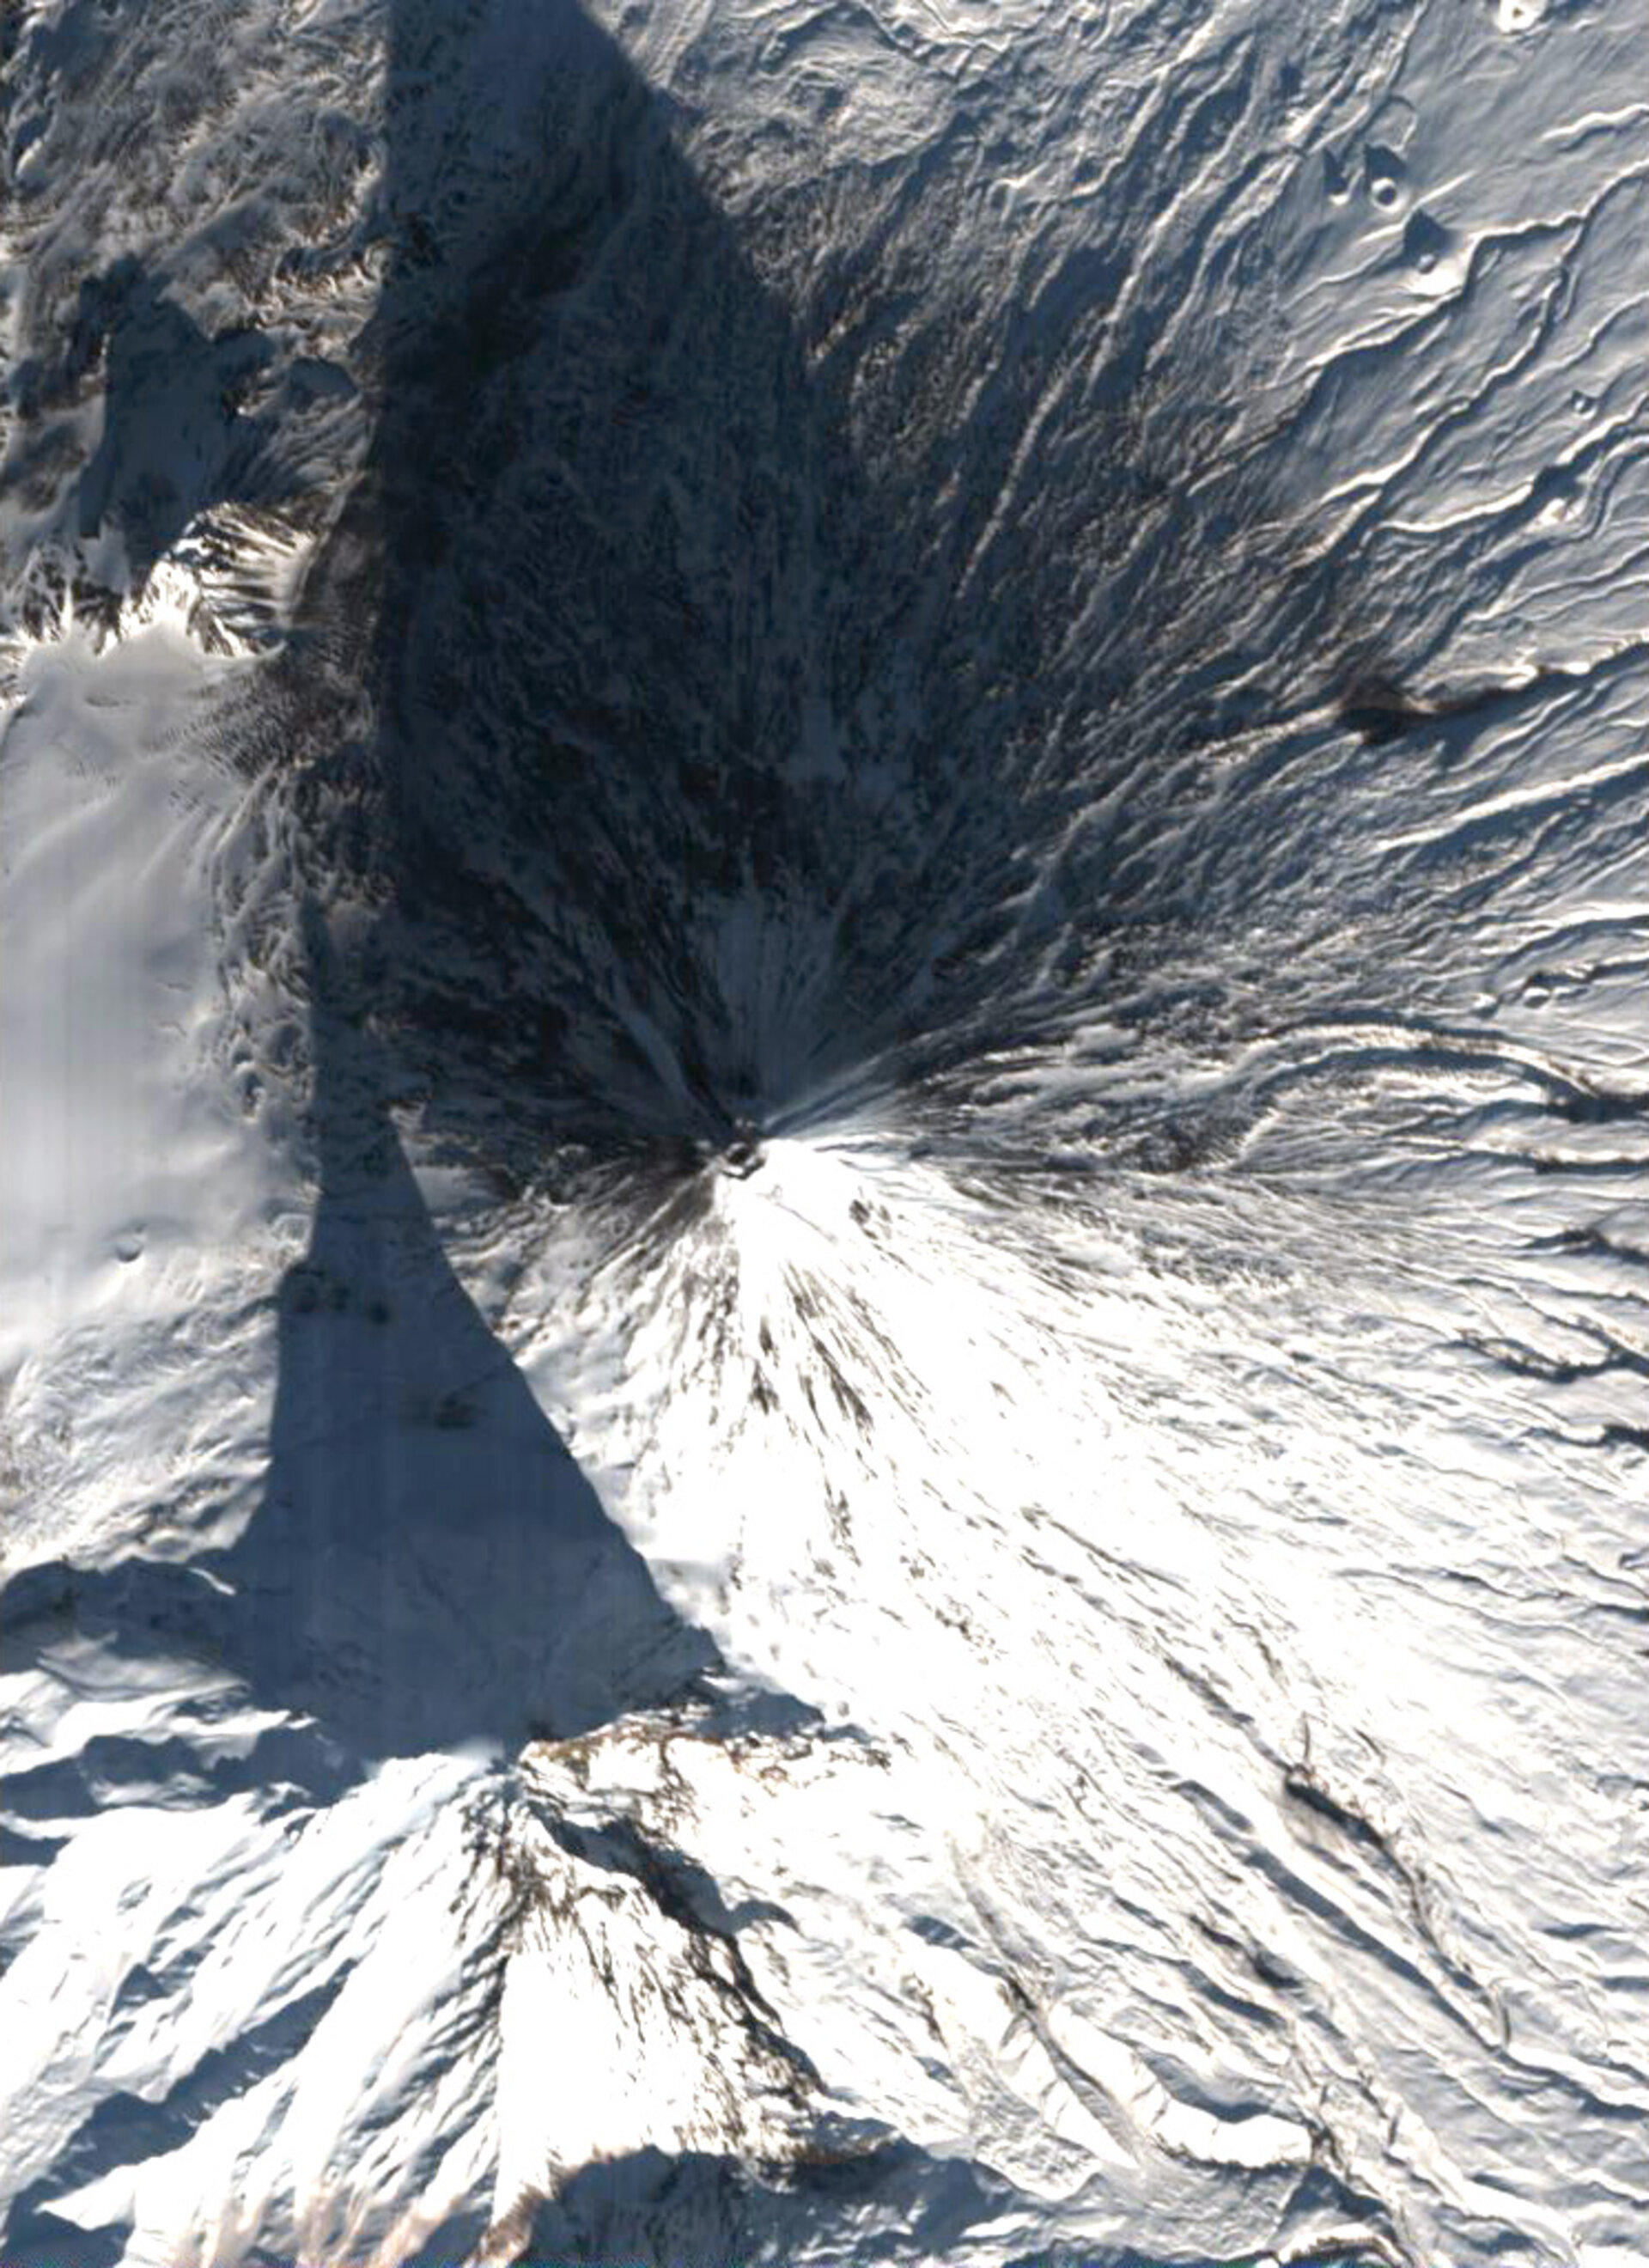 Proba observes the snow-dusted Kliuchevskoi volcano in Kamchatka Peninsula